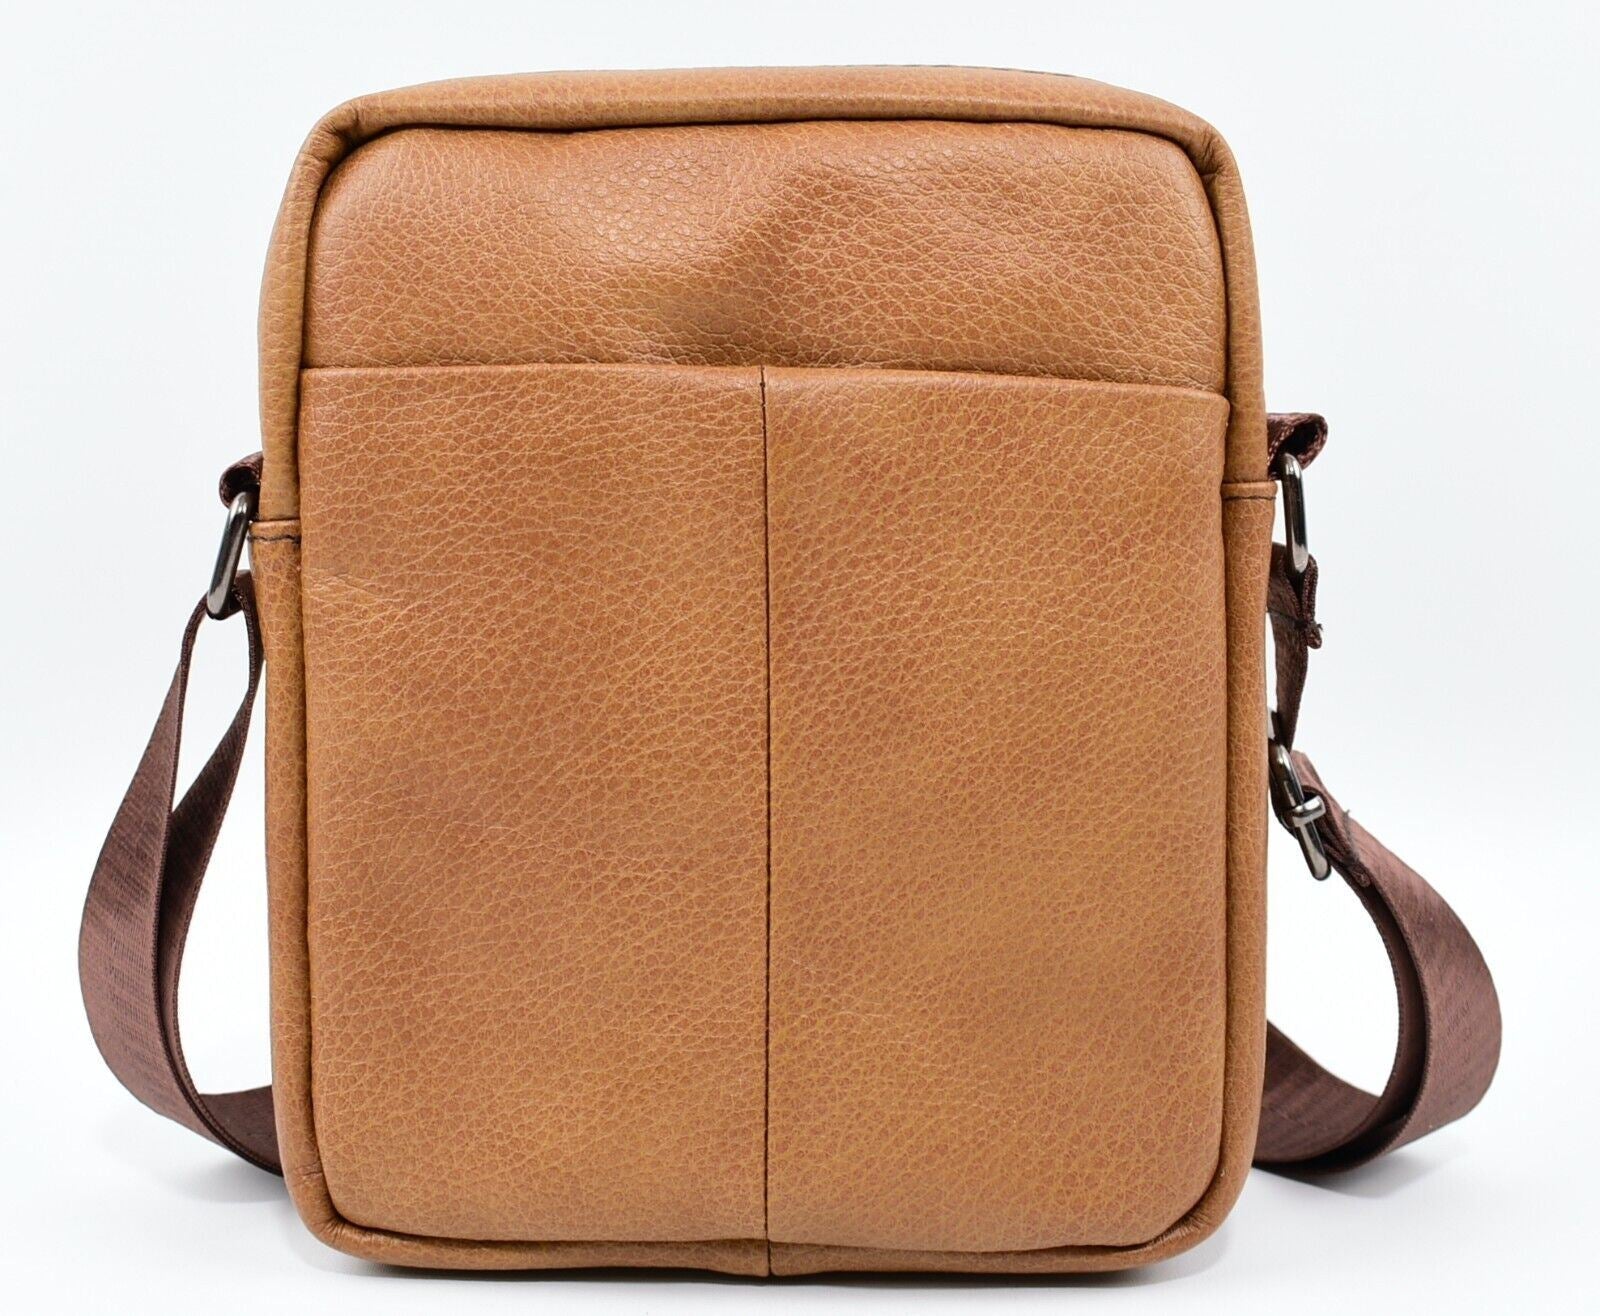 Mens Genuine Leather Small Crossbody Bag Messenger, Camel Brown